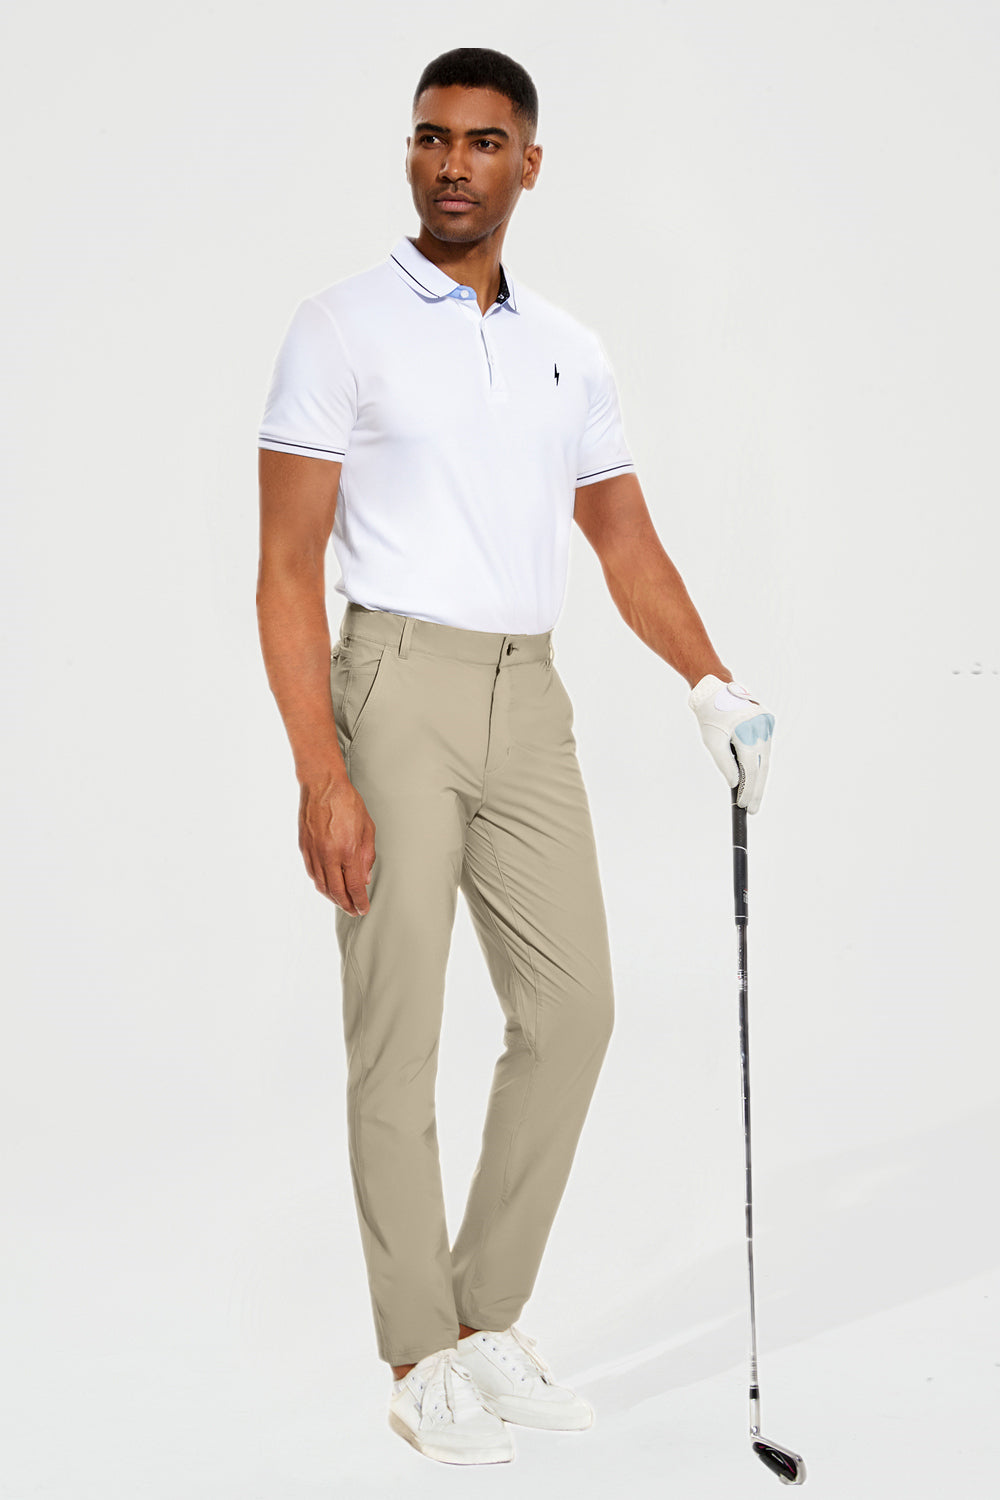 PULI Golf Pants Men Stretch Slim Fit Quick Dry Lightweight